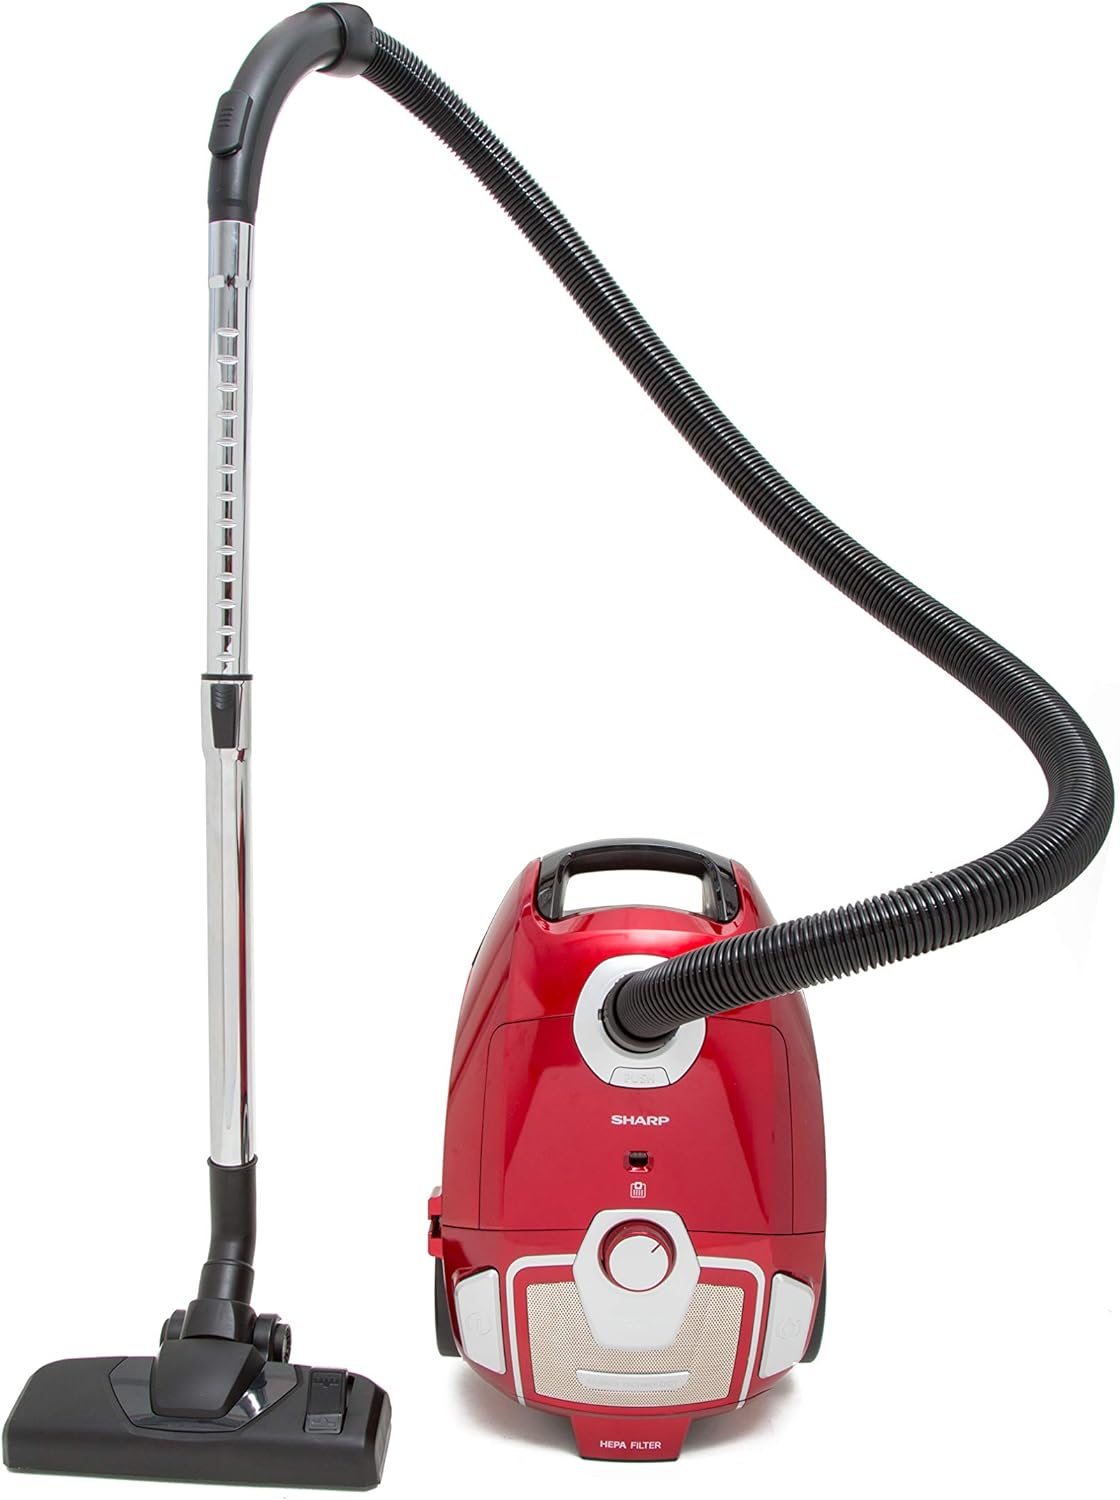 SHARP Vacuum Cleaner Bag 2200W – Red